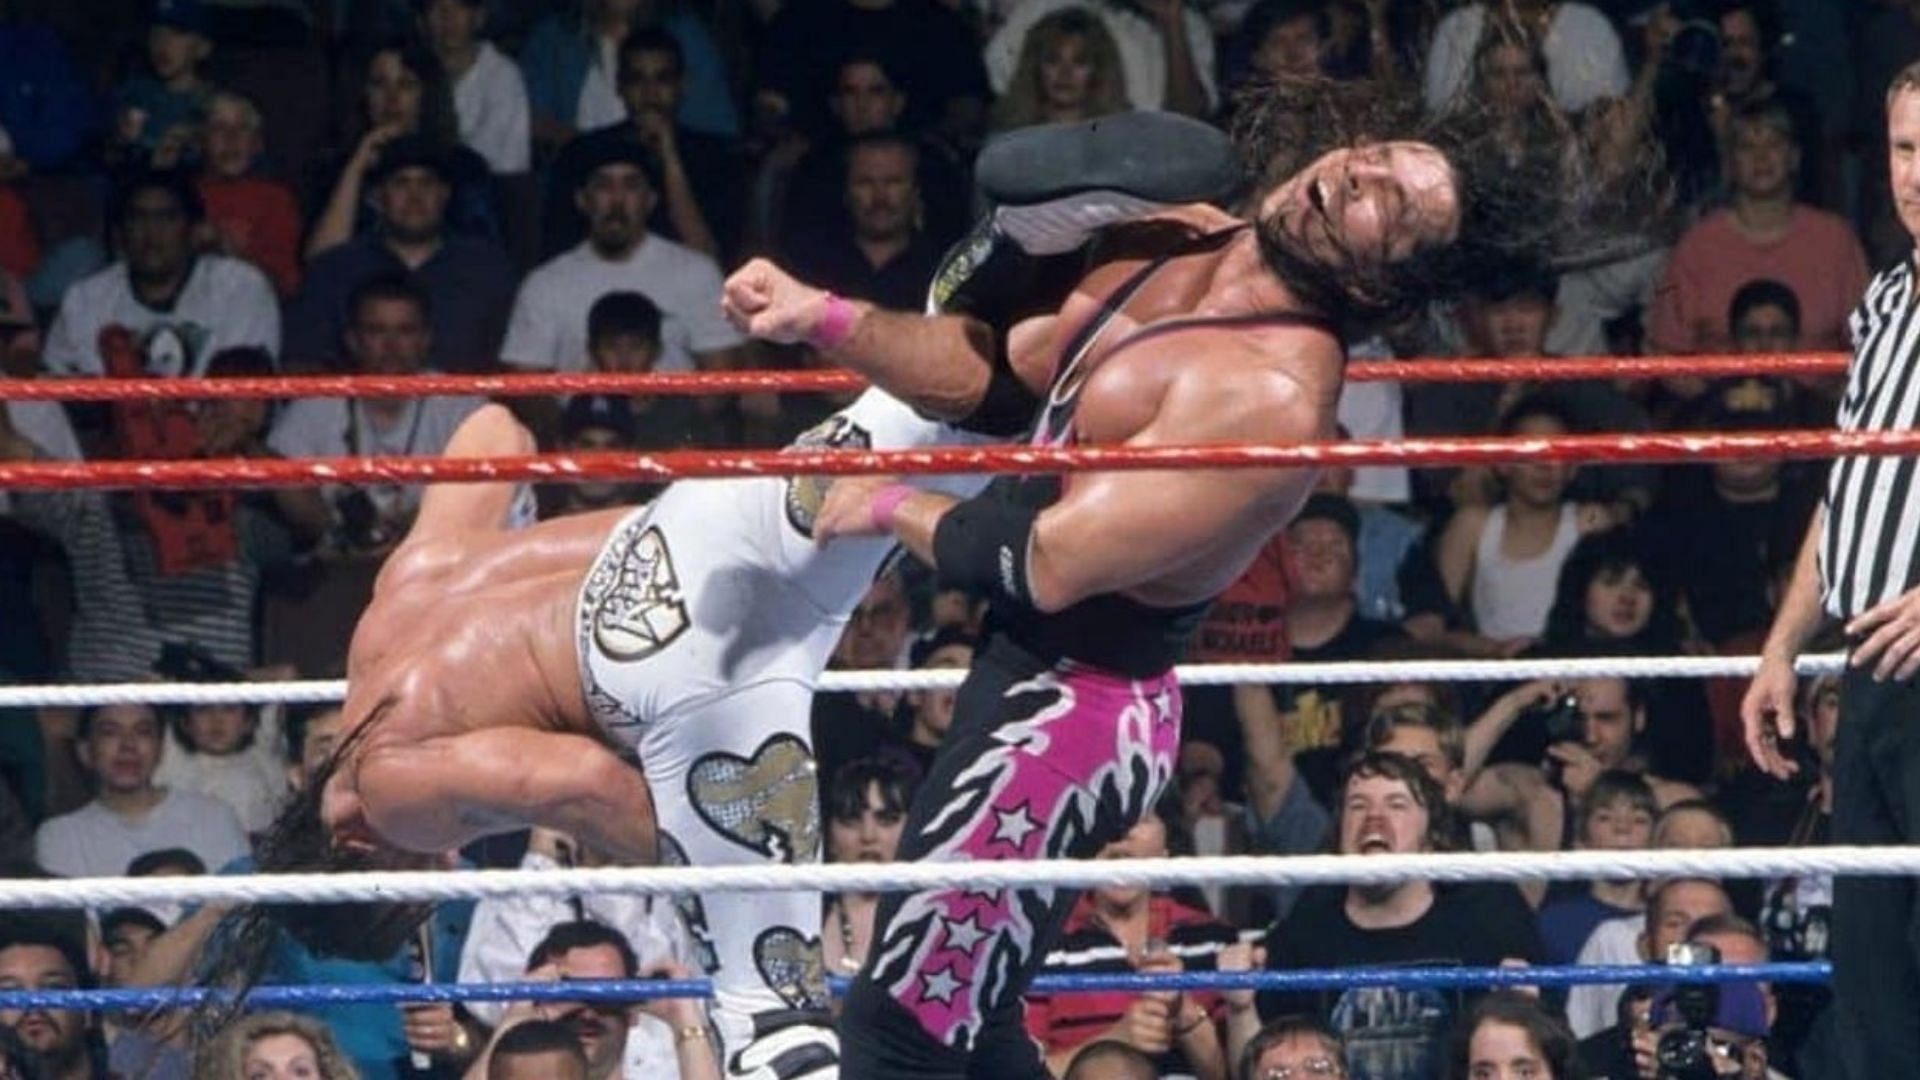 Shawn Michaels landing the Sweet Chin Music on Bret Hart.